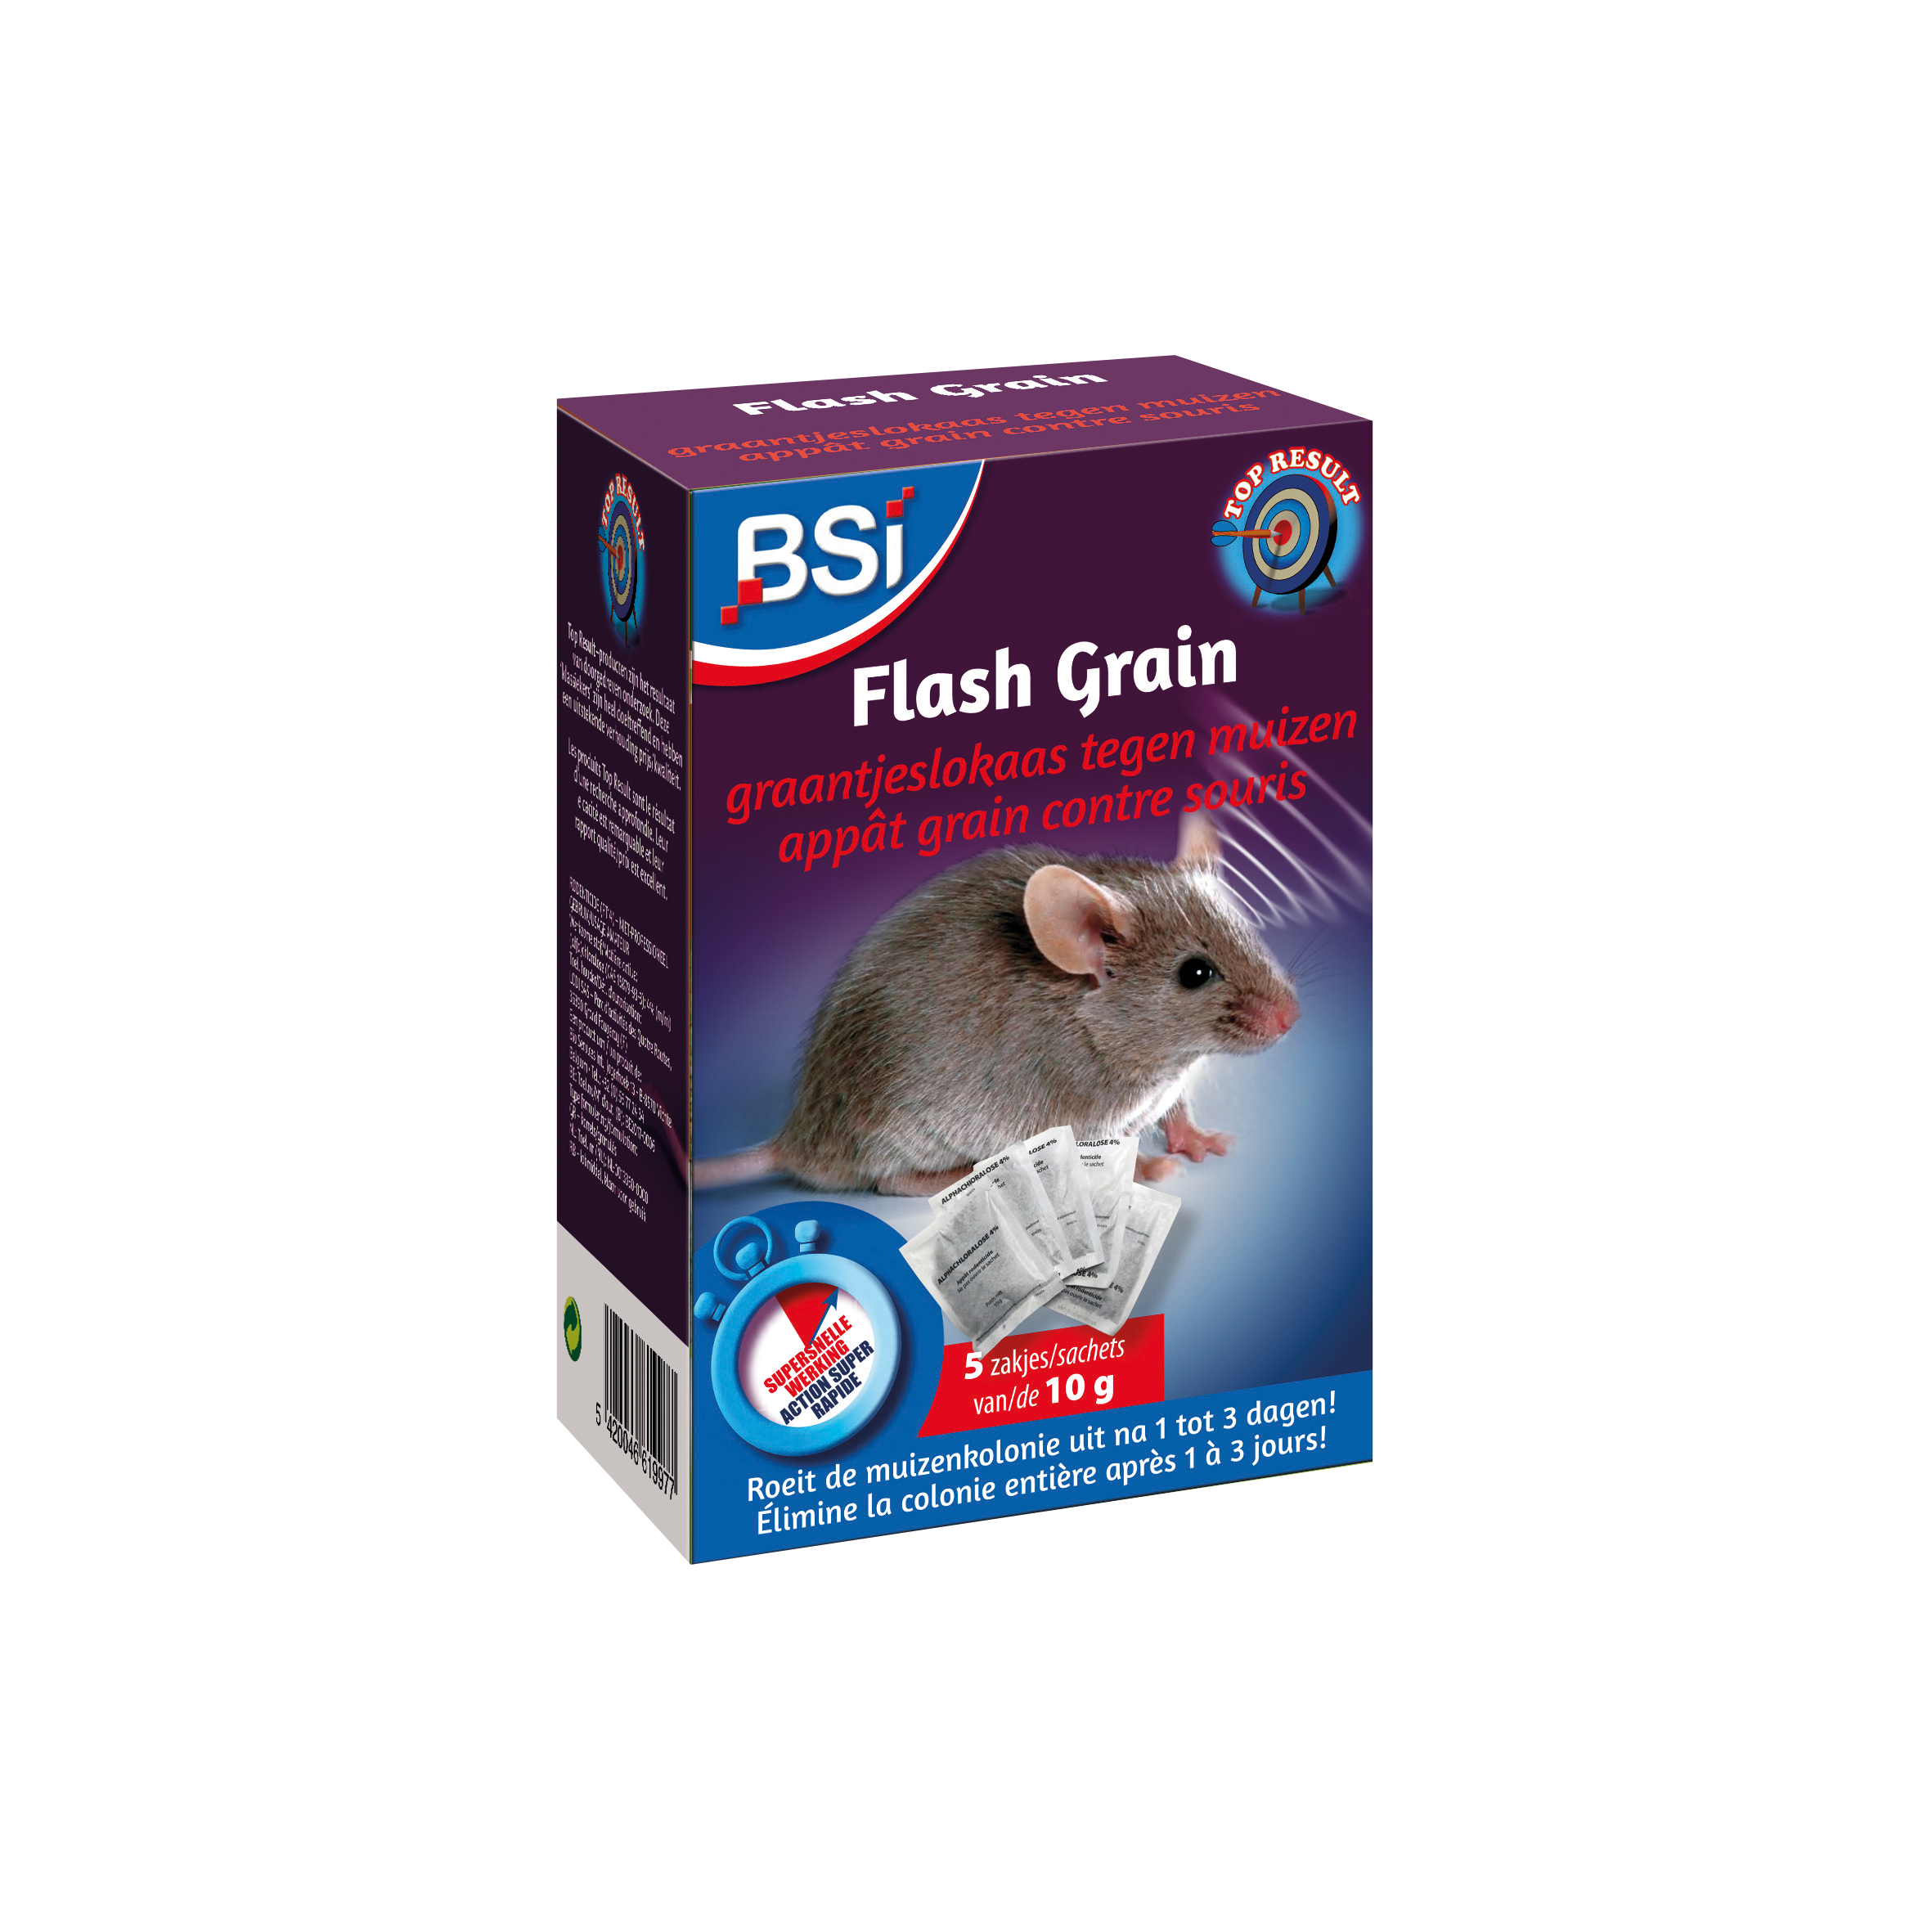 BSI Flash Grain BE/FR/LUX 5 x 10 g image